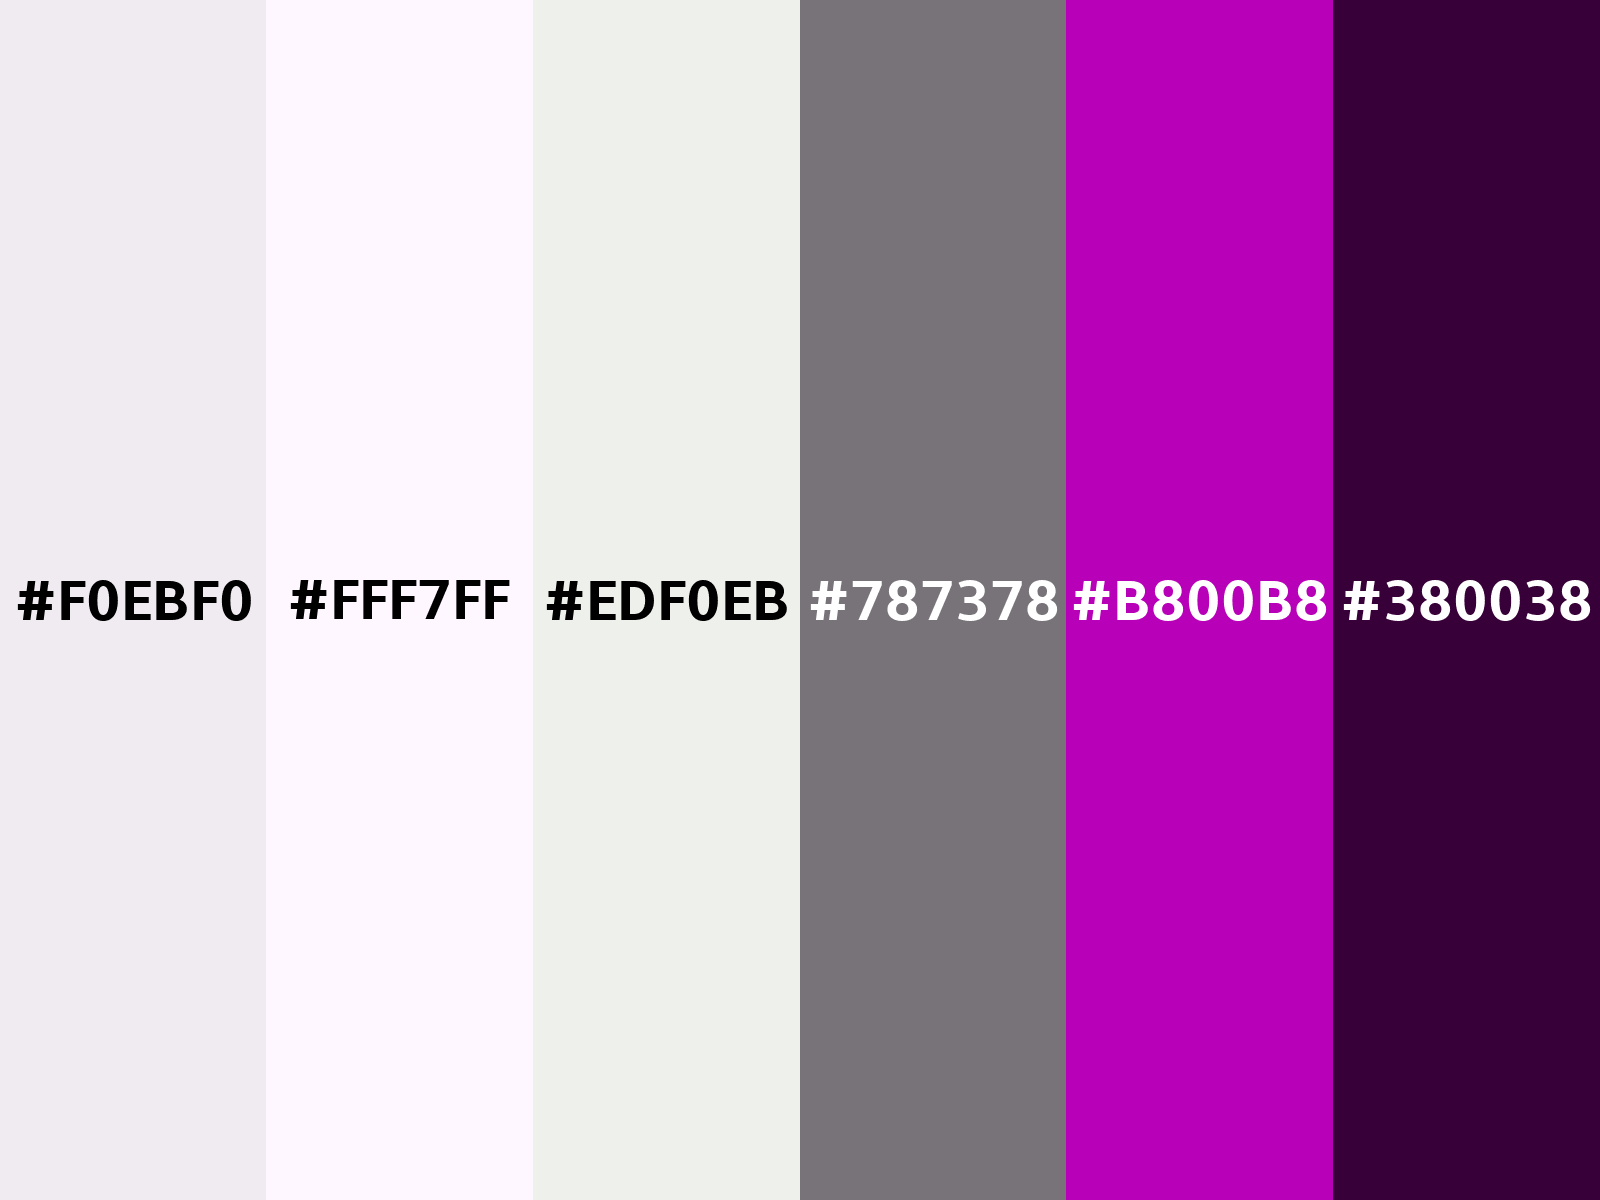 C2EBED Hex Color, RGB: 194, 235, 237